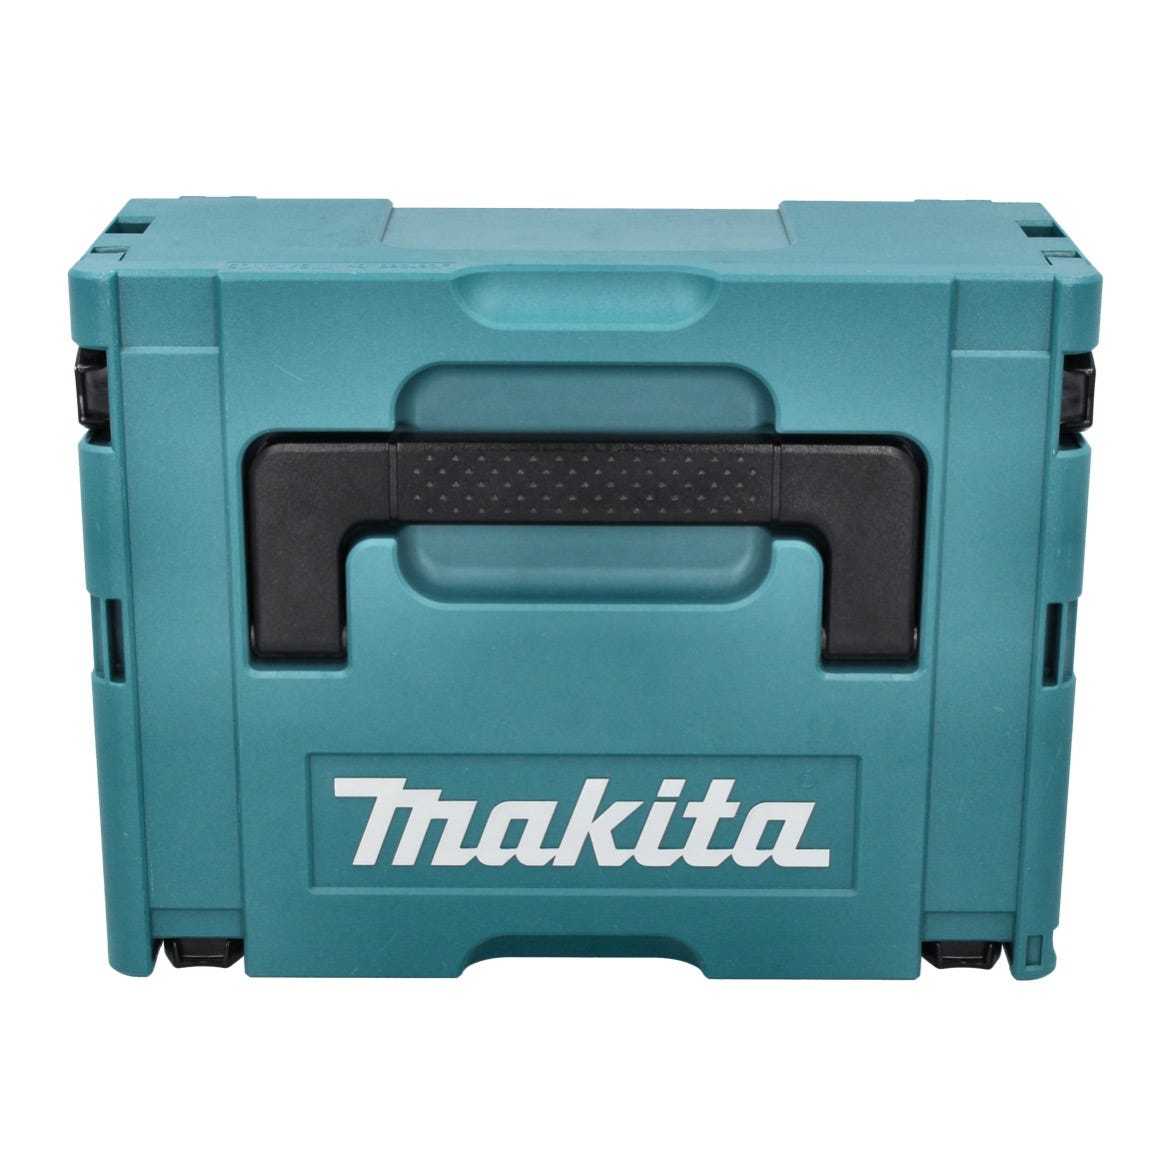 Makita DDF 485 F1J Perceuse-visseuse sans fil 18 V 50 Nm brushless + 1x Batterie 3,0 Ah + Coffret Makpac - sans chargeur 2